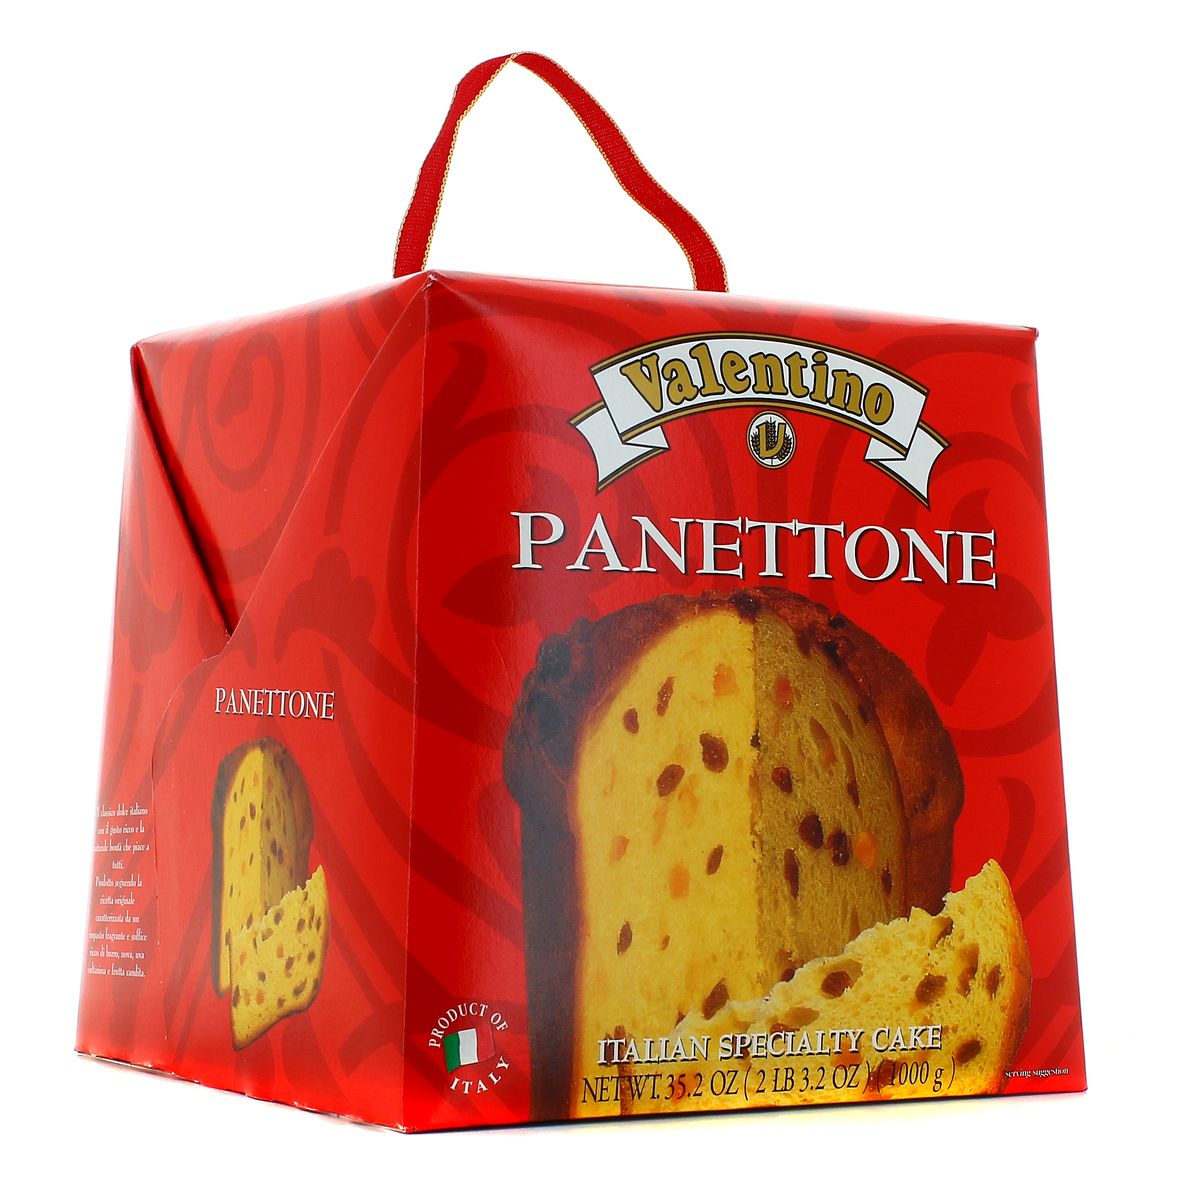 Promo Panettone sans gluten biorevola - 350 g chez naturéO